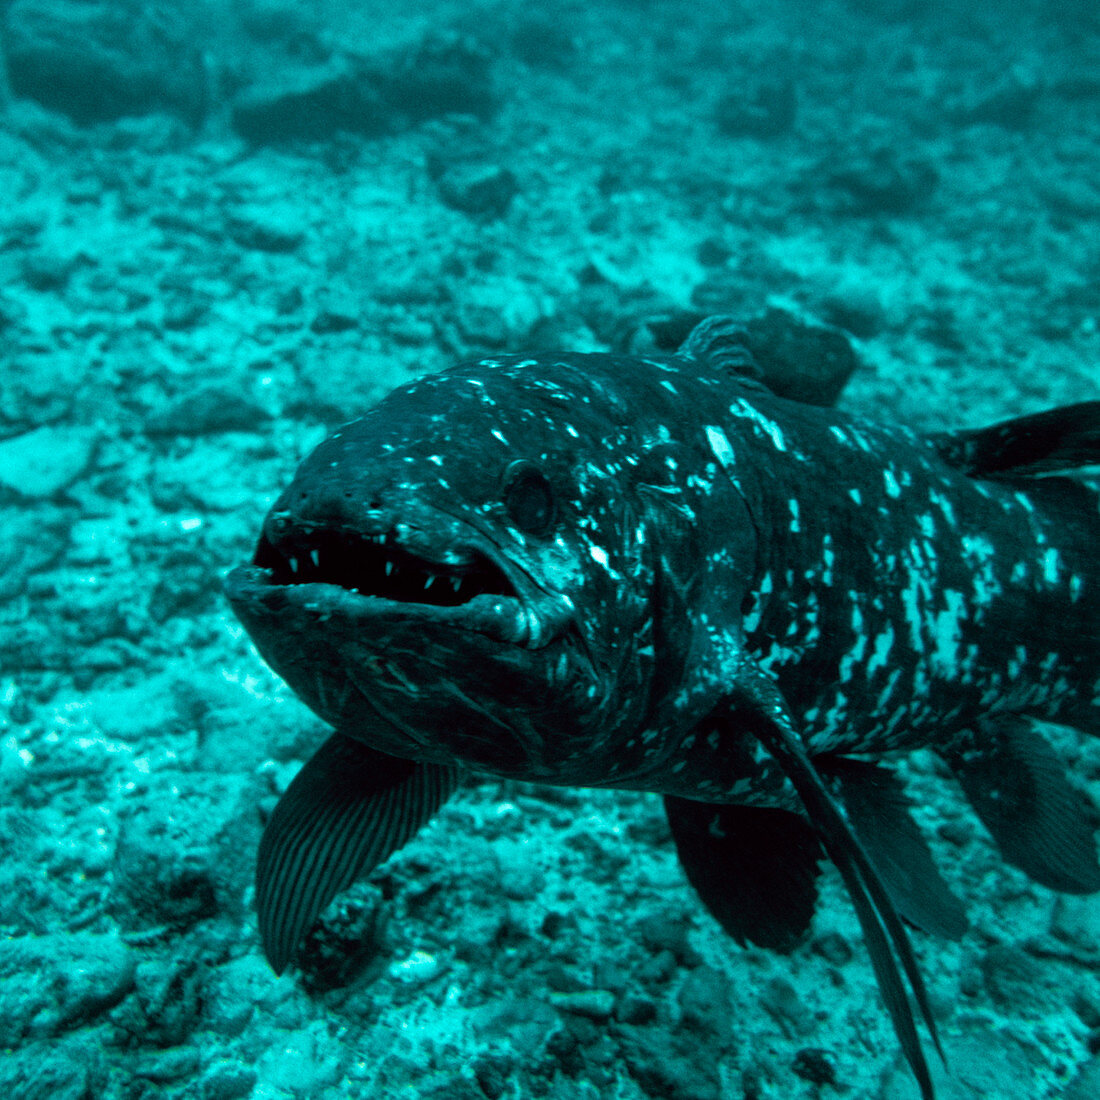 Coelacanth fish